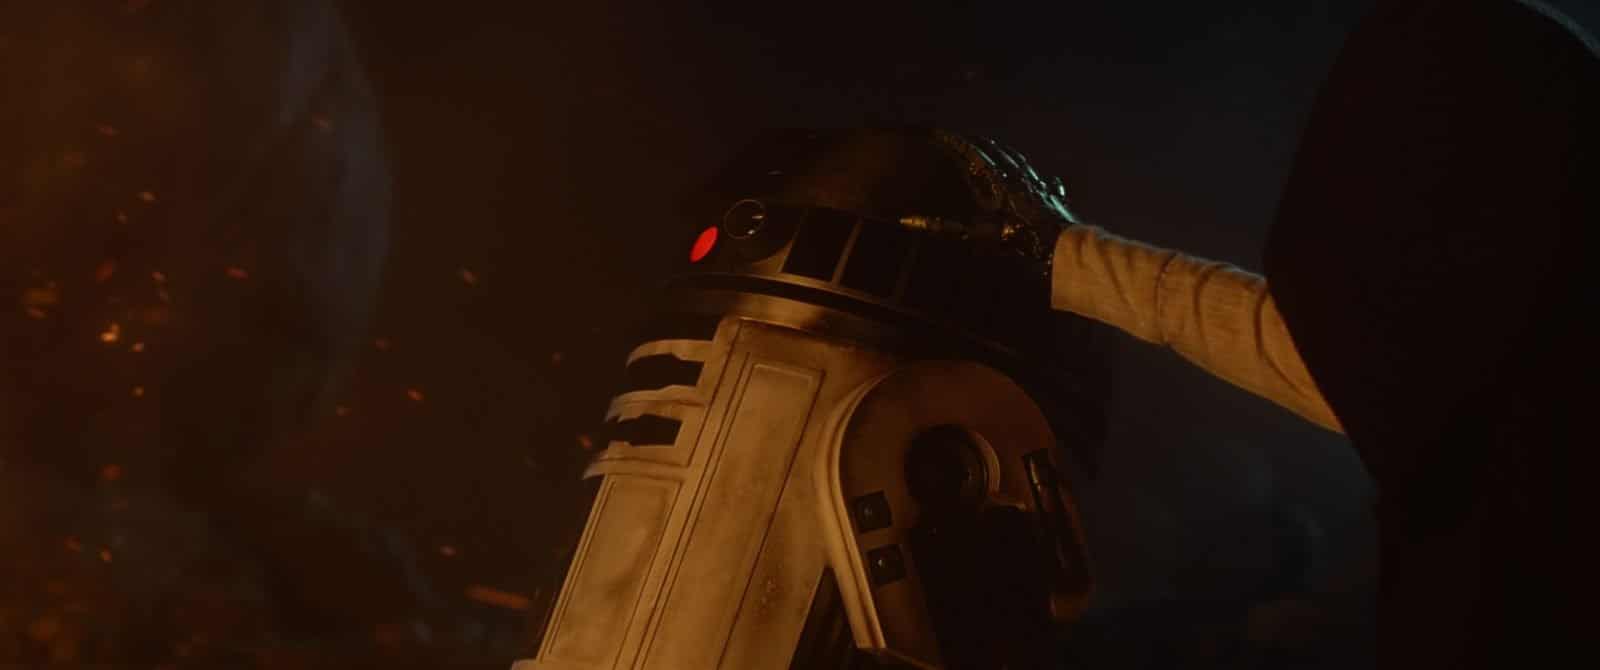 Star Wars VII The Force Awakens 28 - Robotic hand on R2-D2 Luke Skywalker